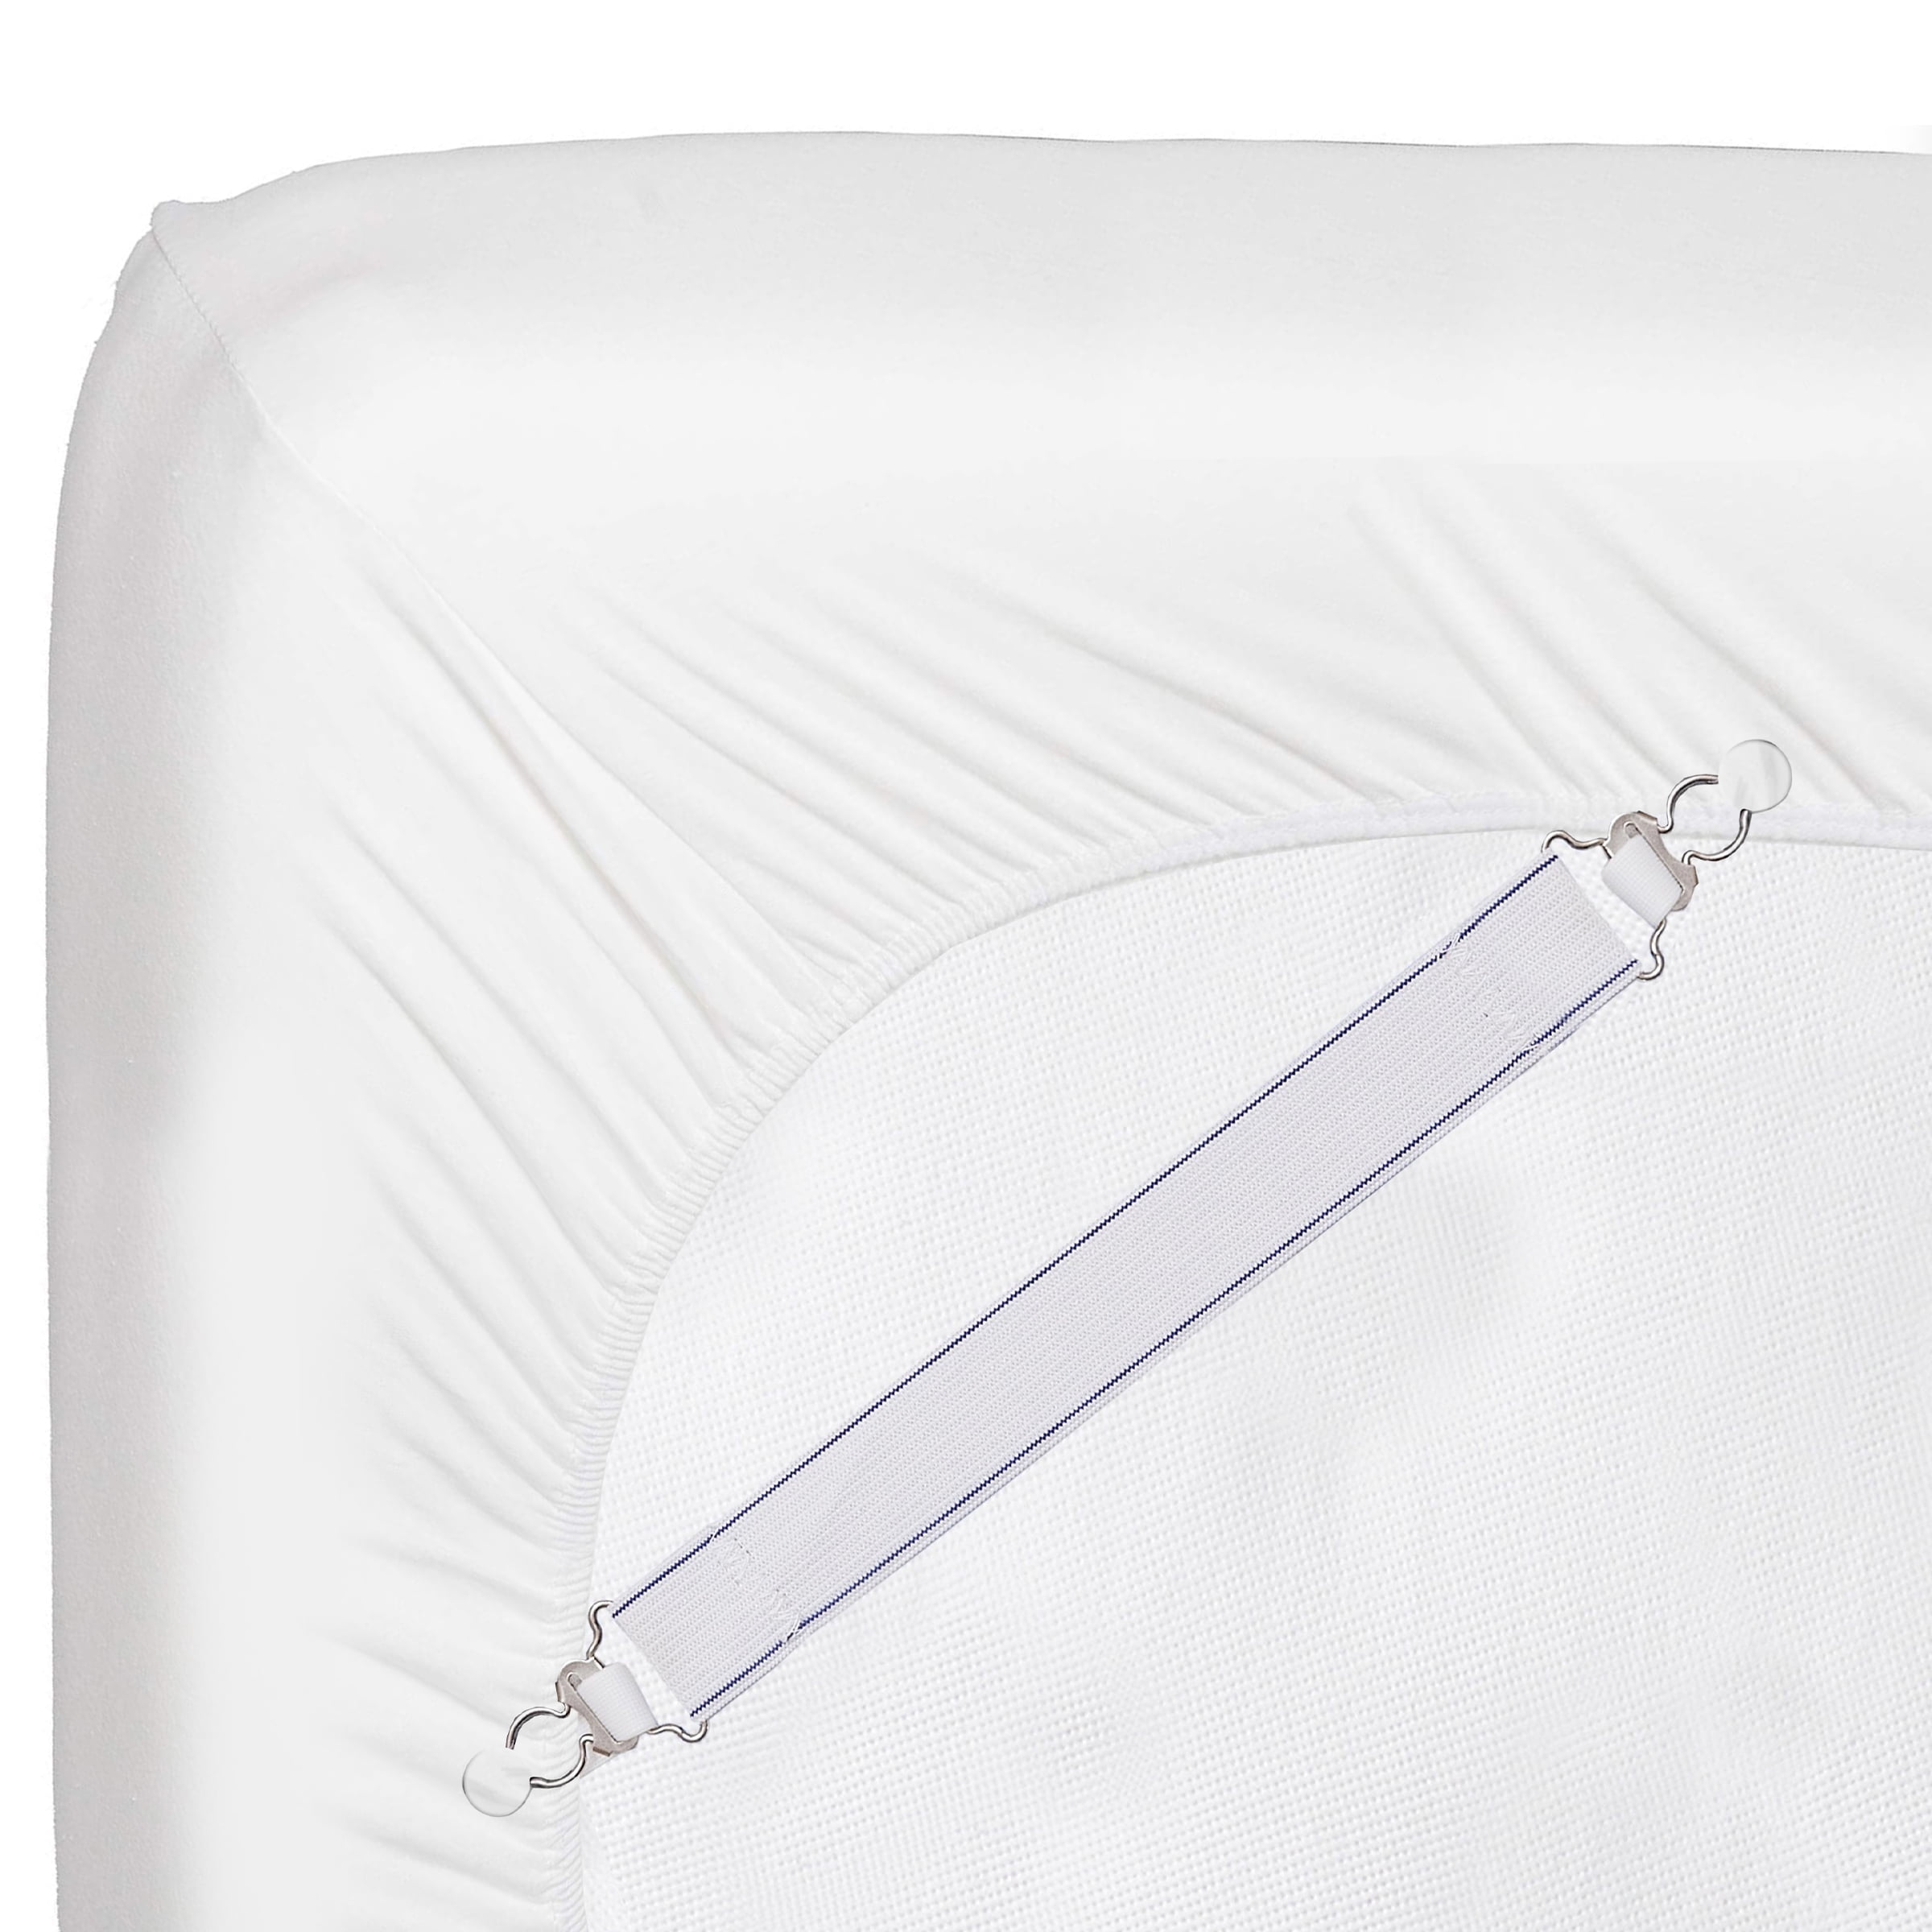 Dww-2pcs Adjustable Long Bed Sheet Holder Straps Bed Sheet Clips,  Adjustable Cross Fitted Sheet Tensioners, Fits All Square Mattress - Black